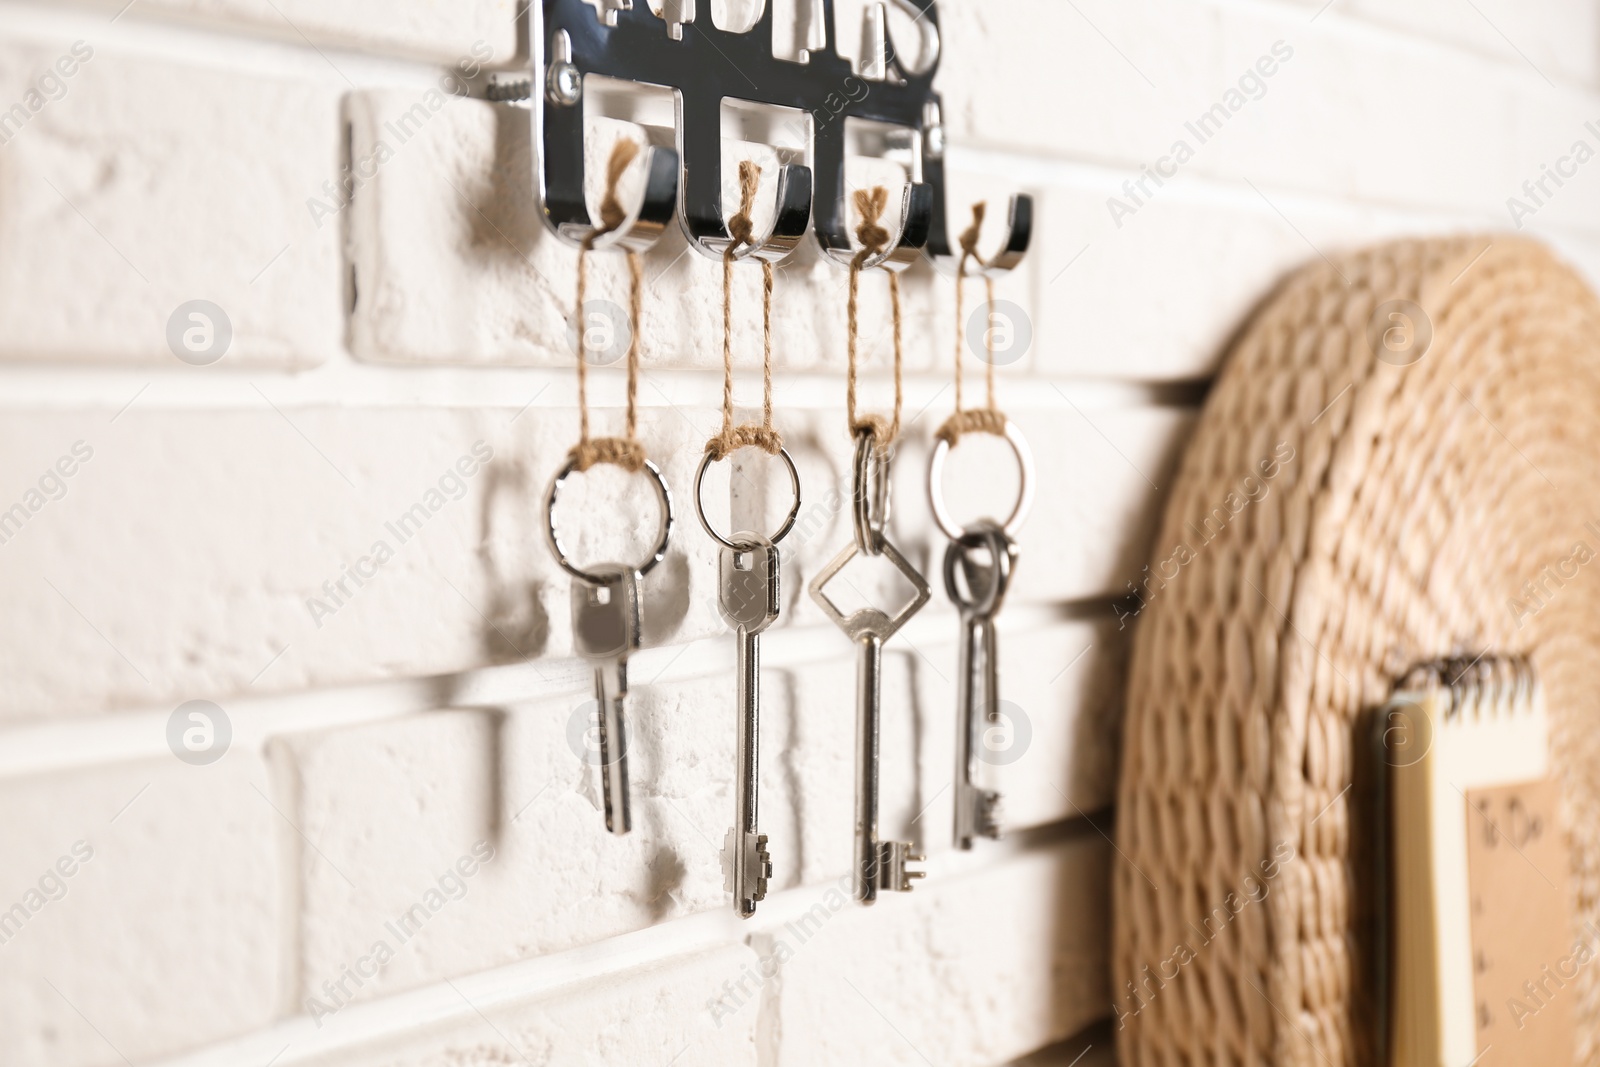 Photo of Metal key holder on white brick wall indoors, closeup